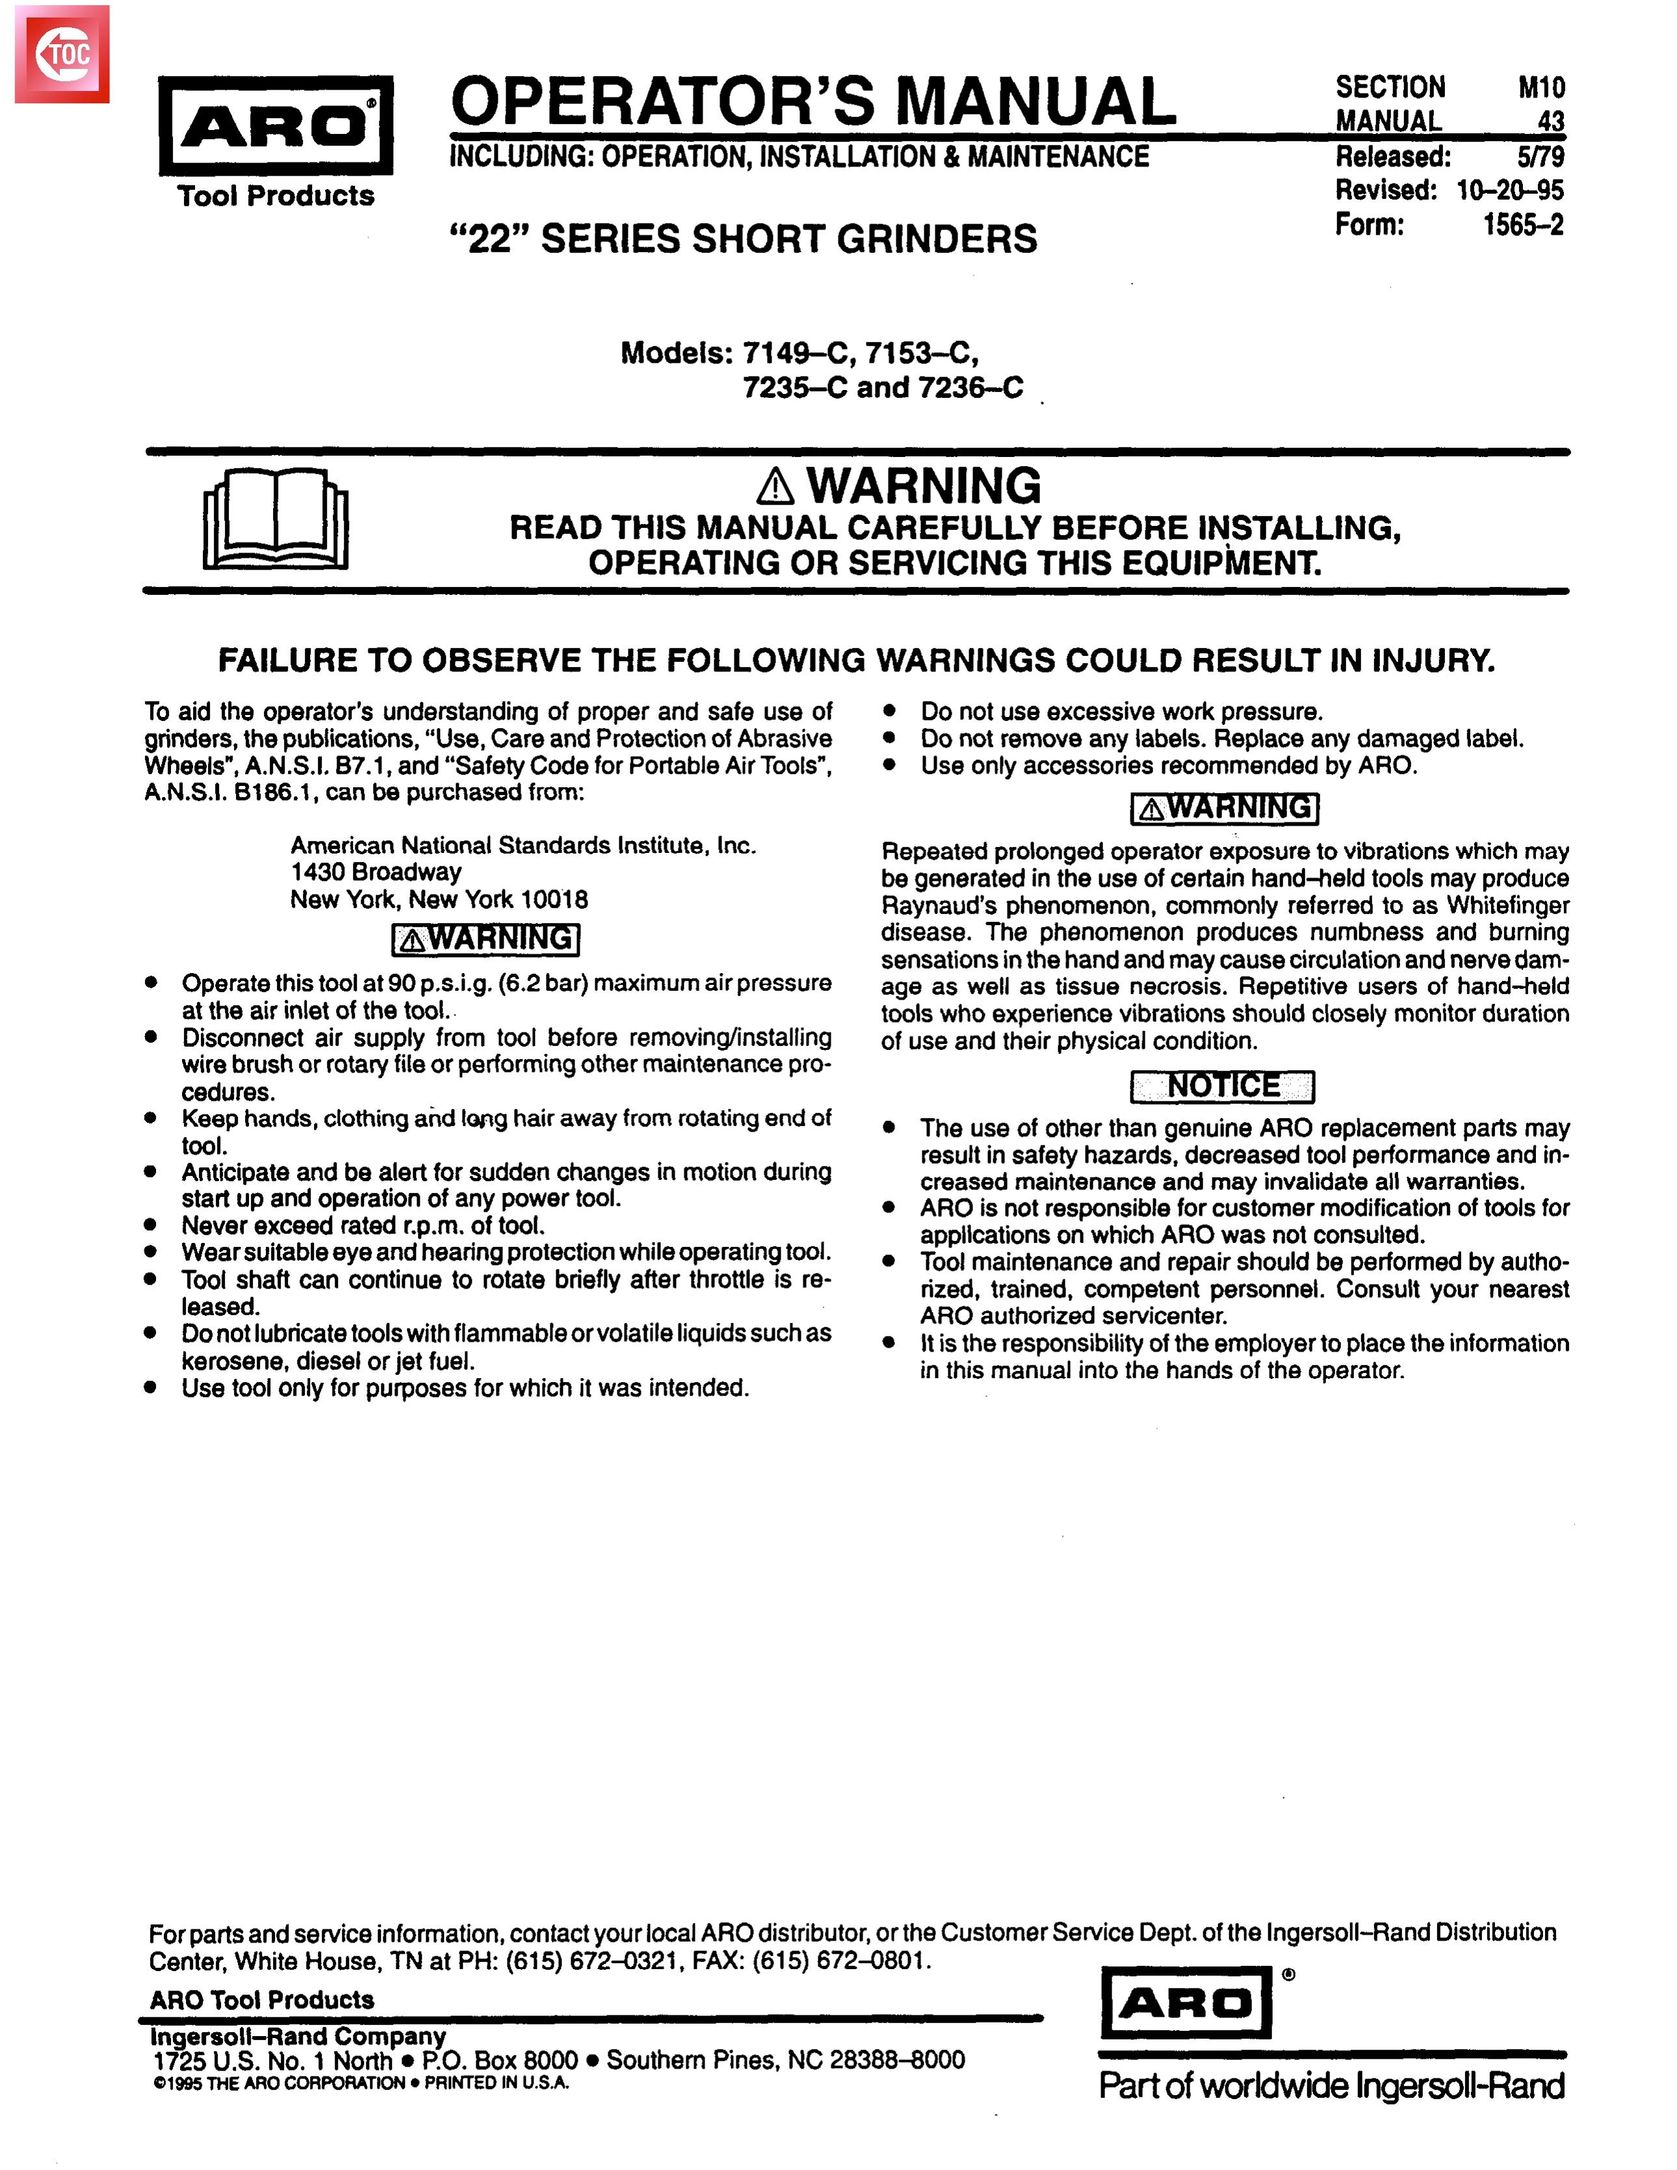 Ingersoll-Rand 7236-C Grinder User Manual